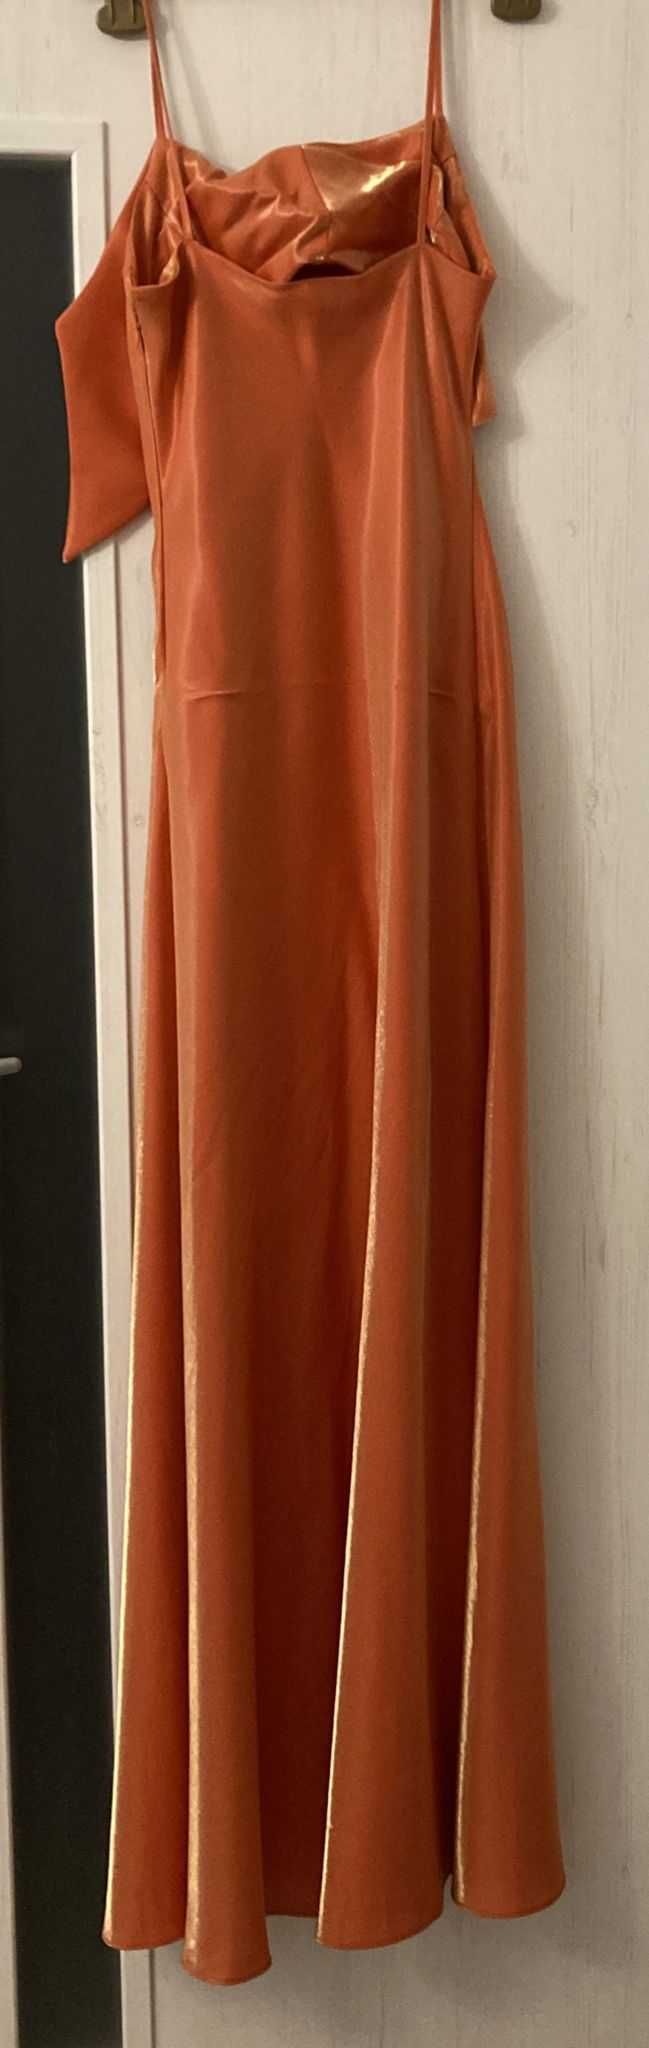 Rochie eleganta lunga cu sal - portocaliu satinat